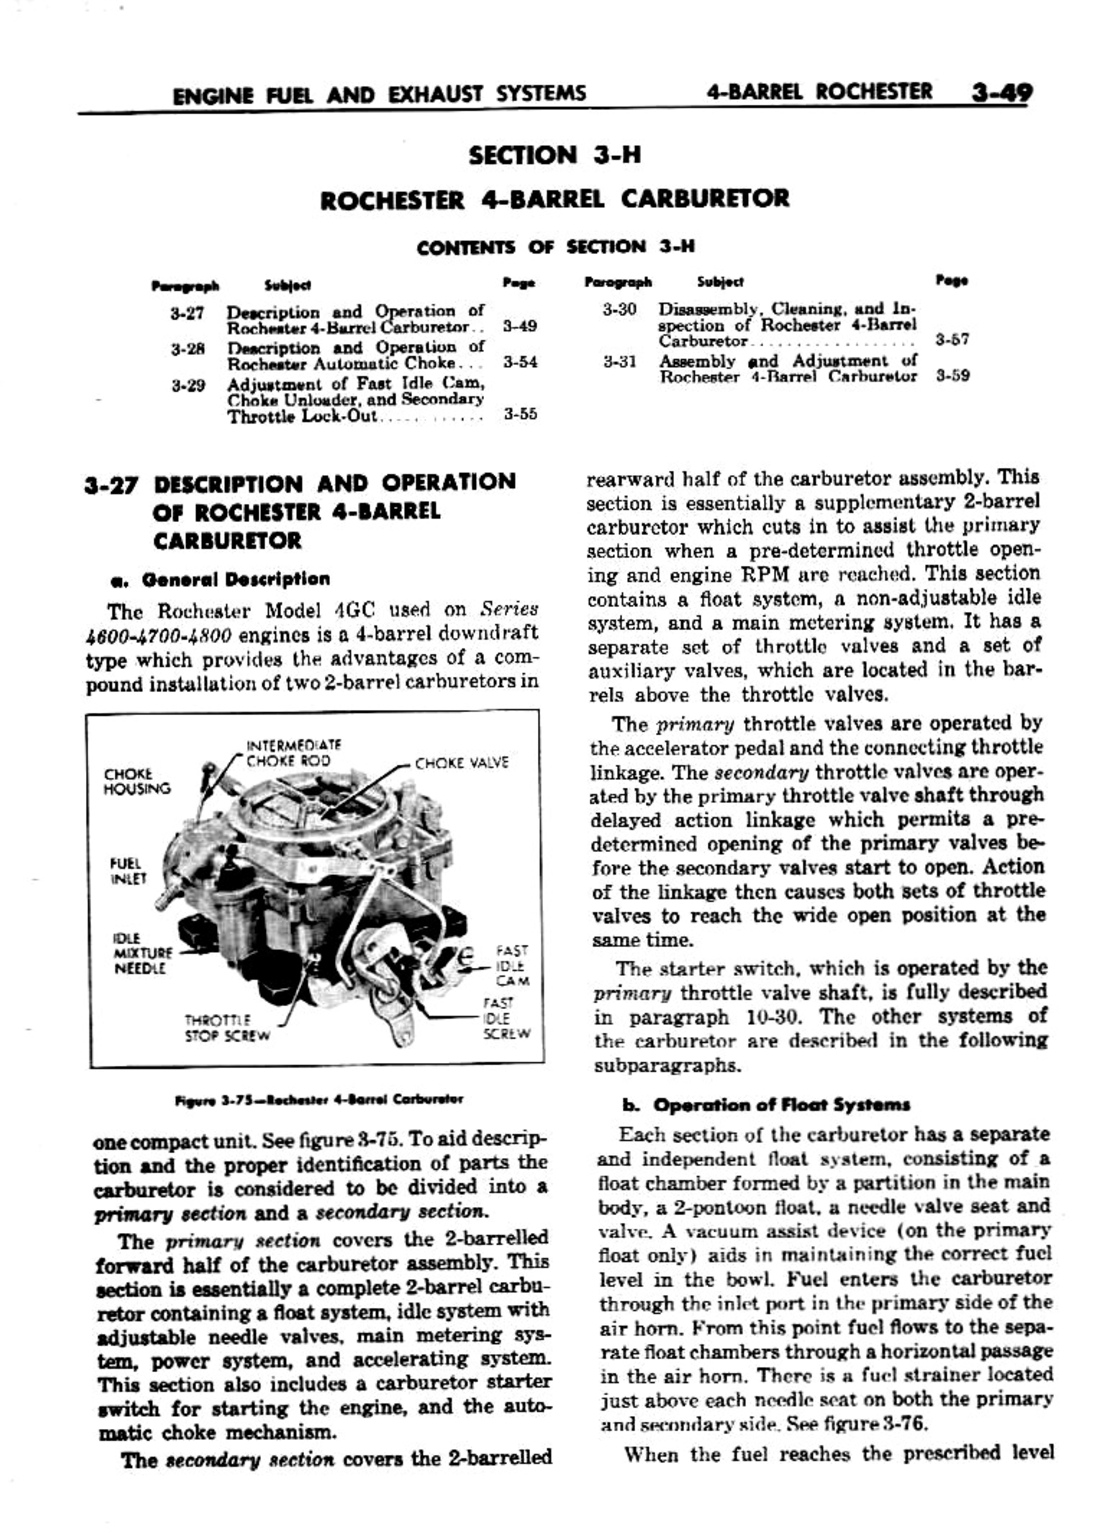 n_04 1959 Buick Shop Manual - Engine Fuel & Exhaust-049-049.jpg